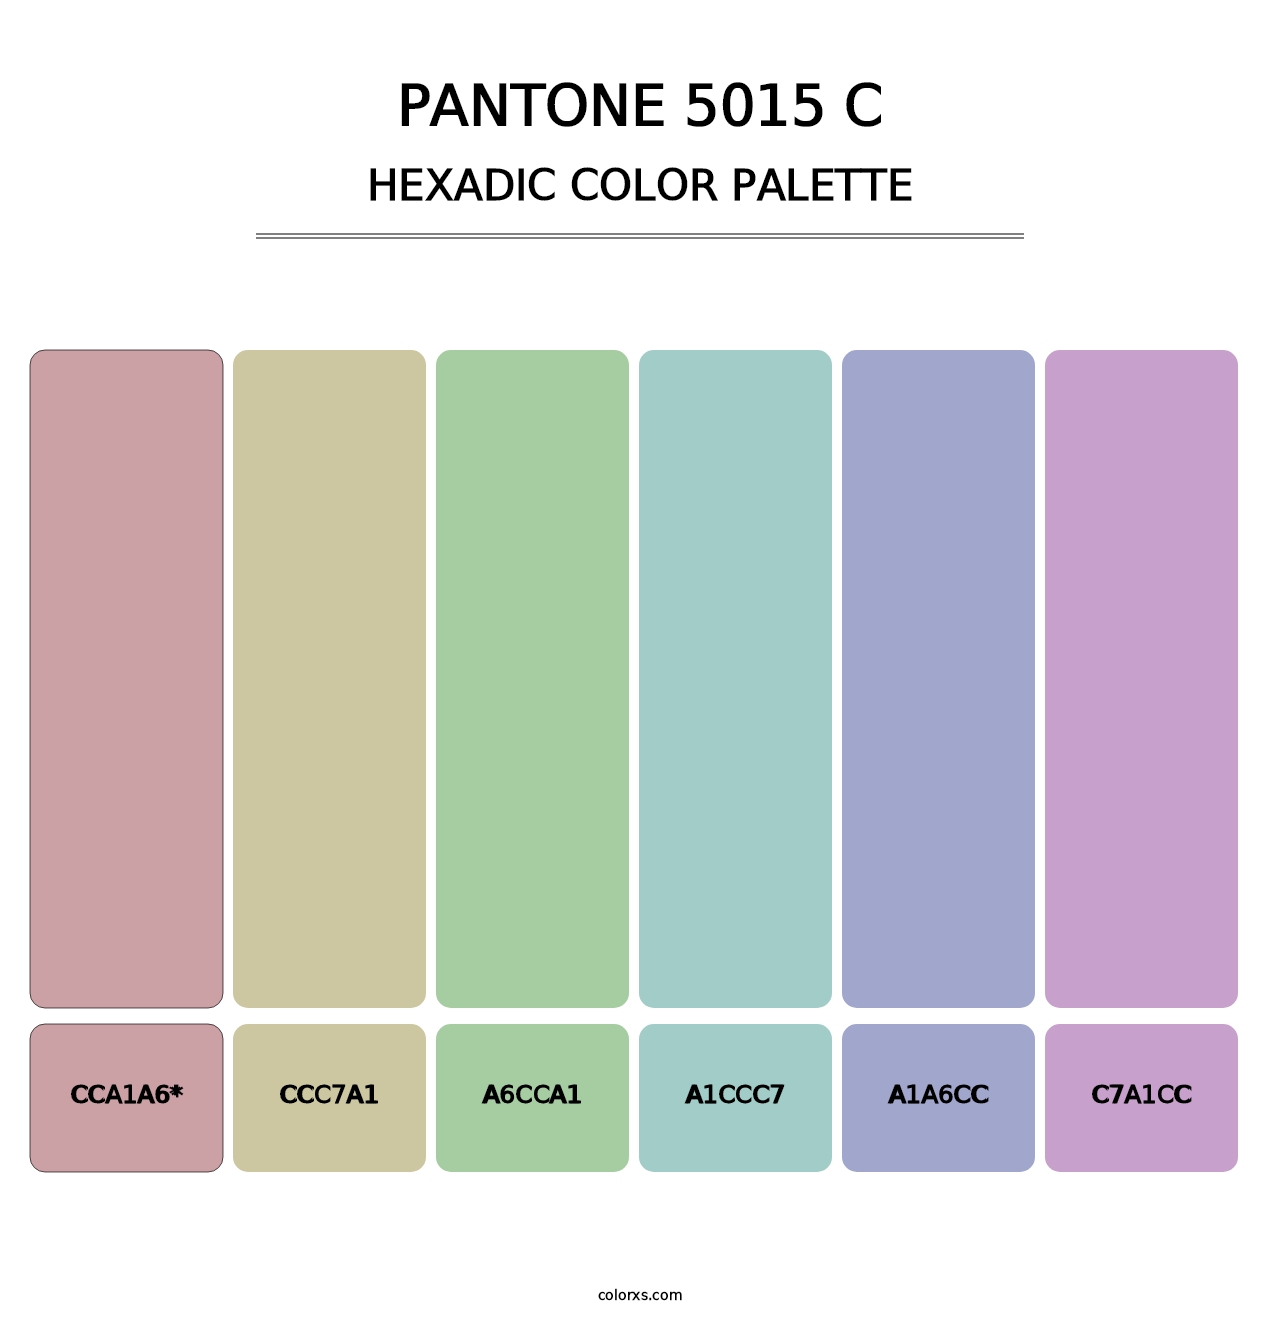 PANTONE 5015 C - Hexadic Color Palette